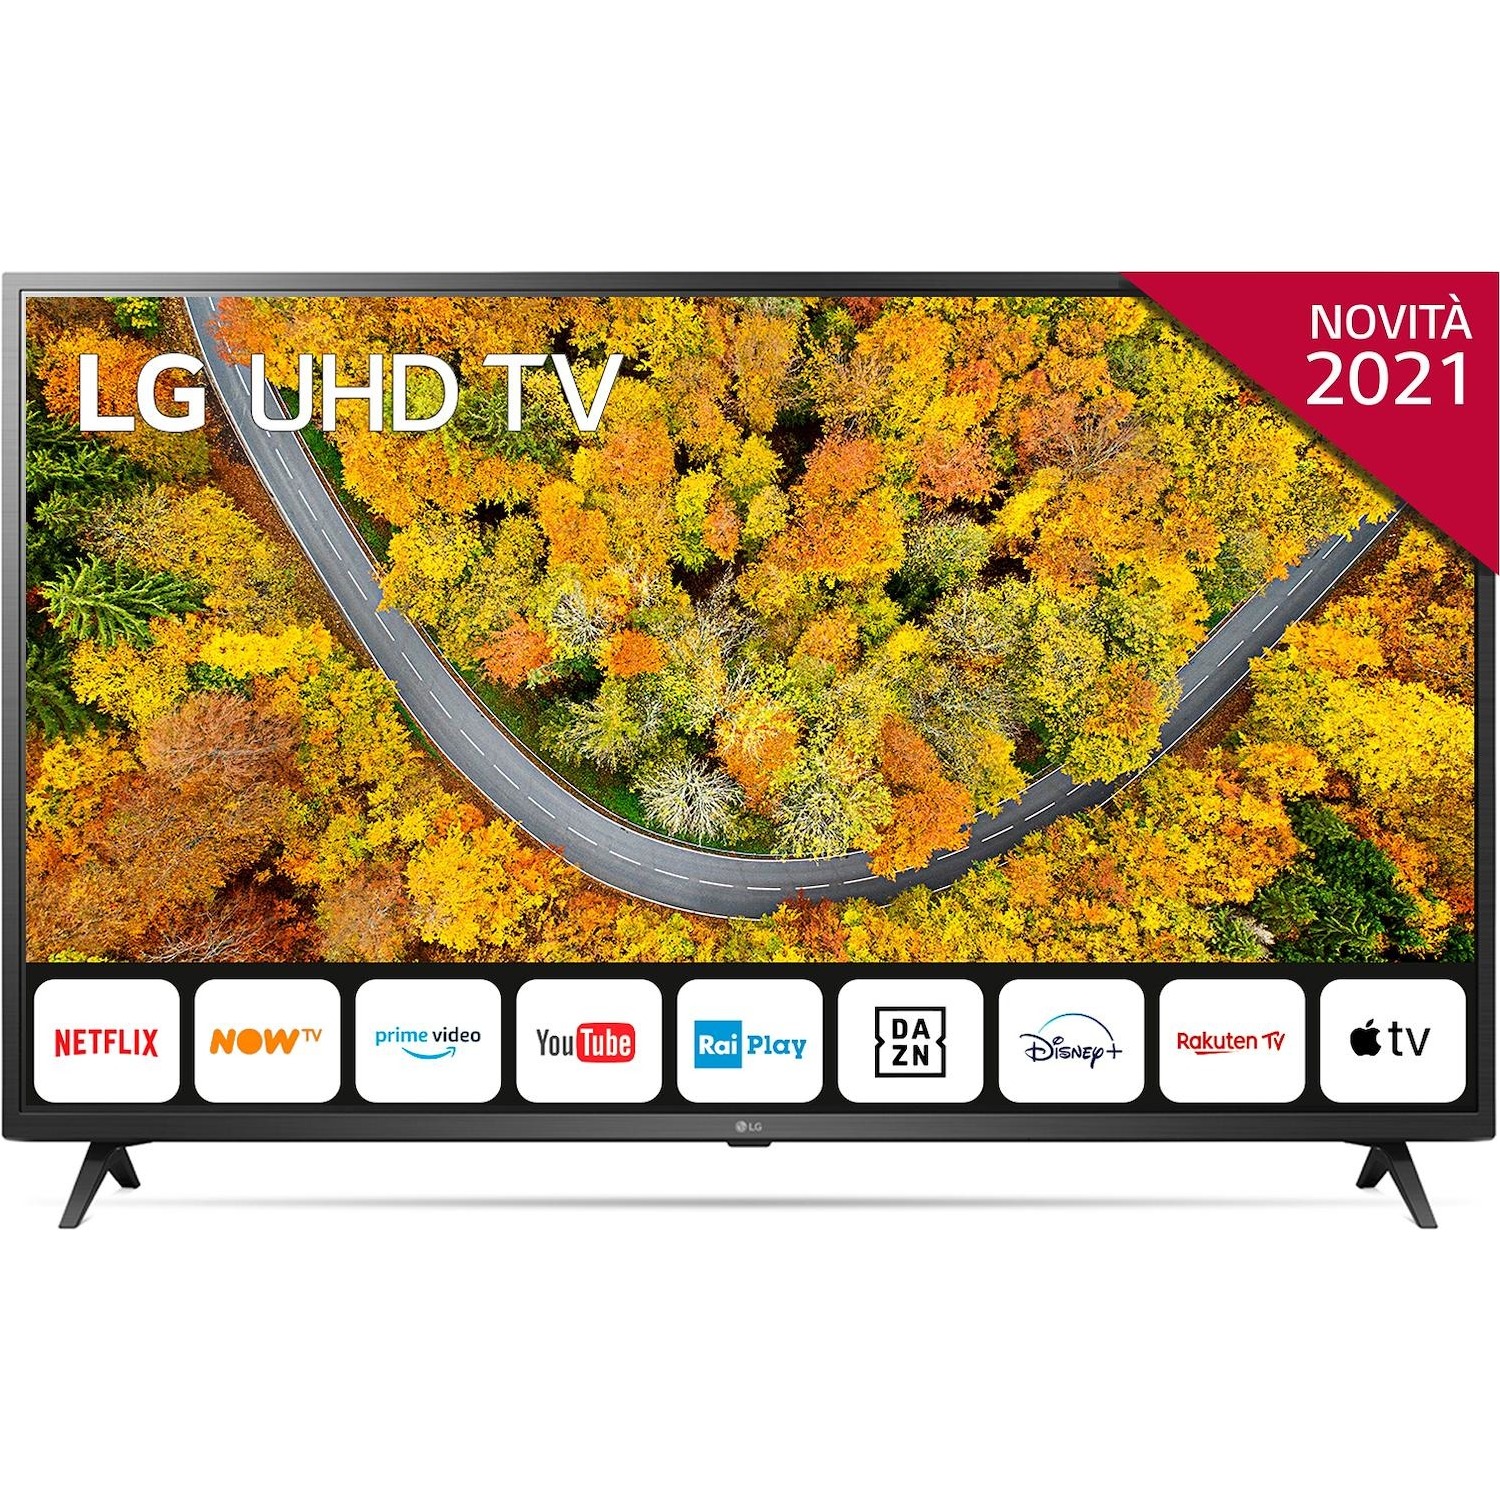 Immagine per TV LED Smart 4K UHD LG 50UP75006 da DIMOStore